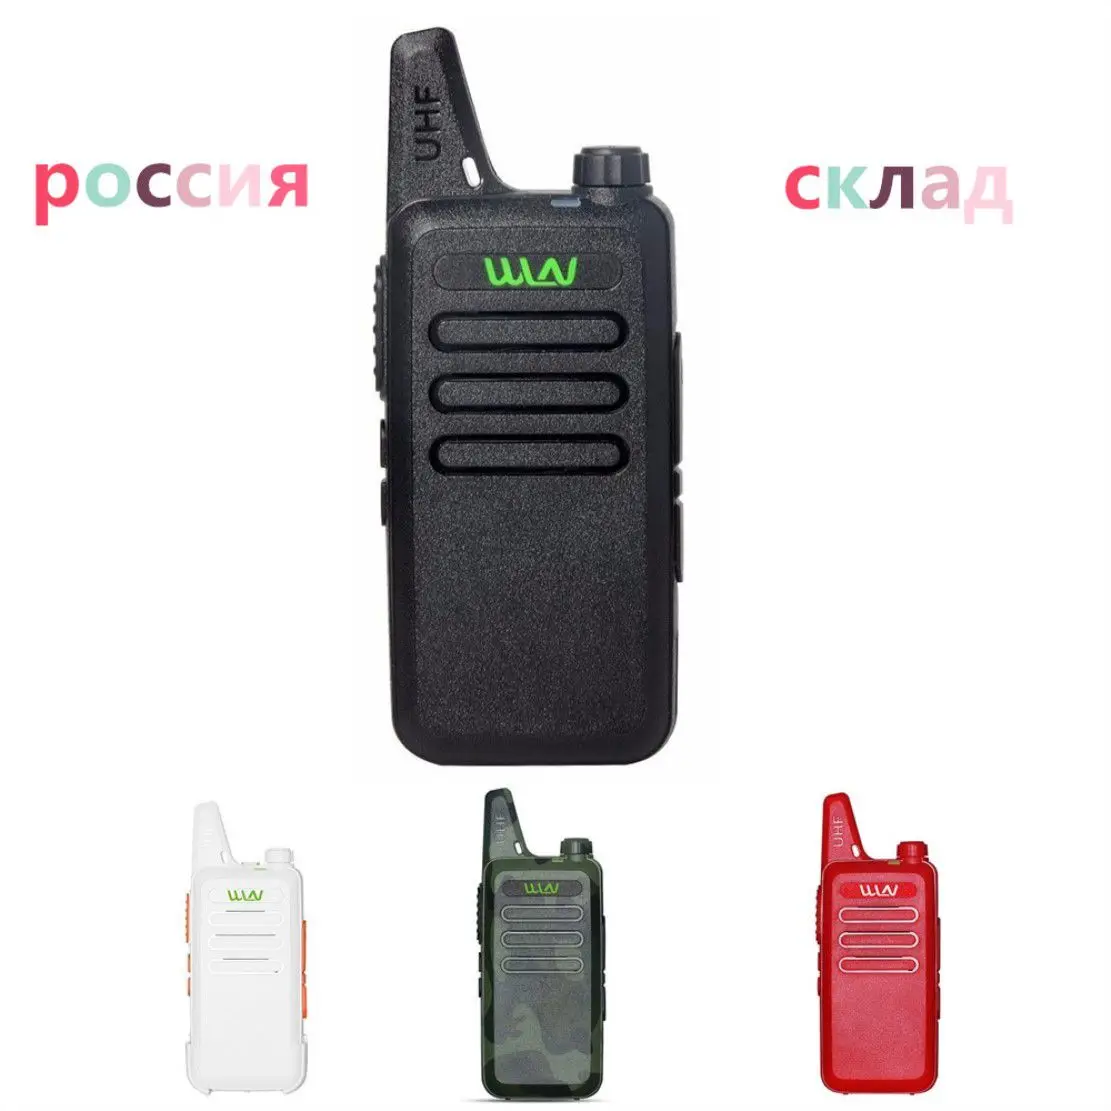 

KDC1 MINI handheld fm transceiver KD C1 UHF two way Radio Ham communicator HF cb radio station Mi Ni Walkie Talkie WLN KD C1